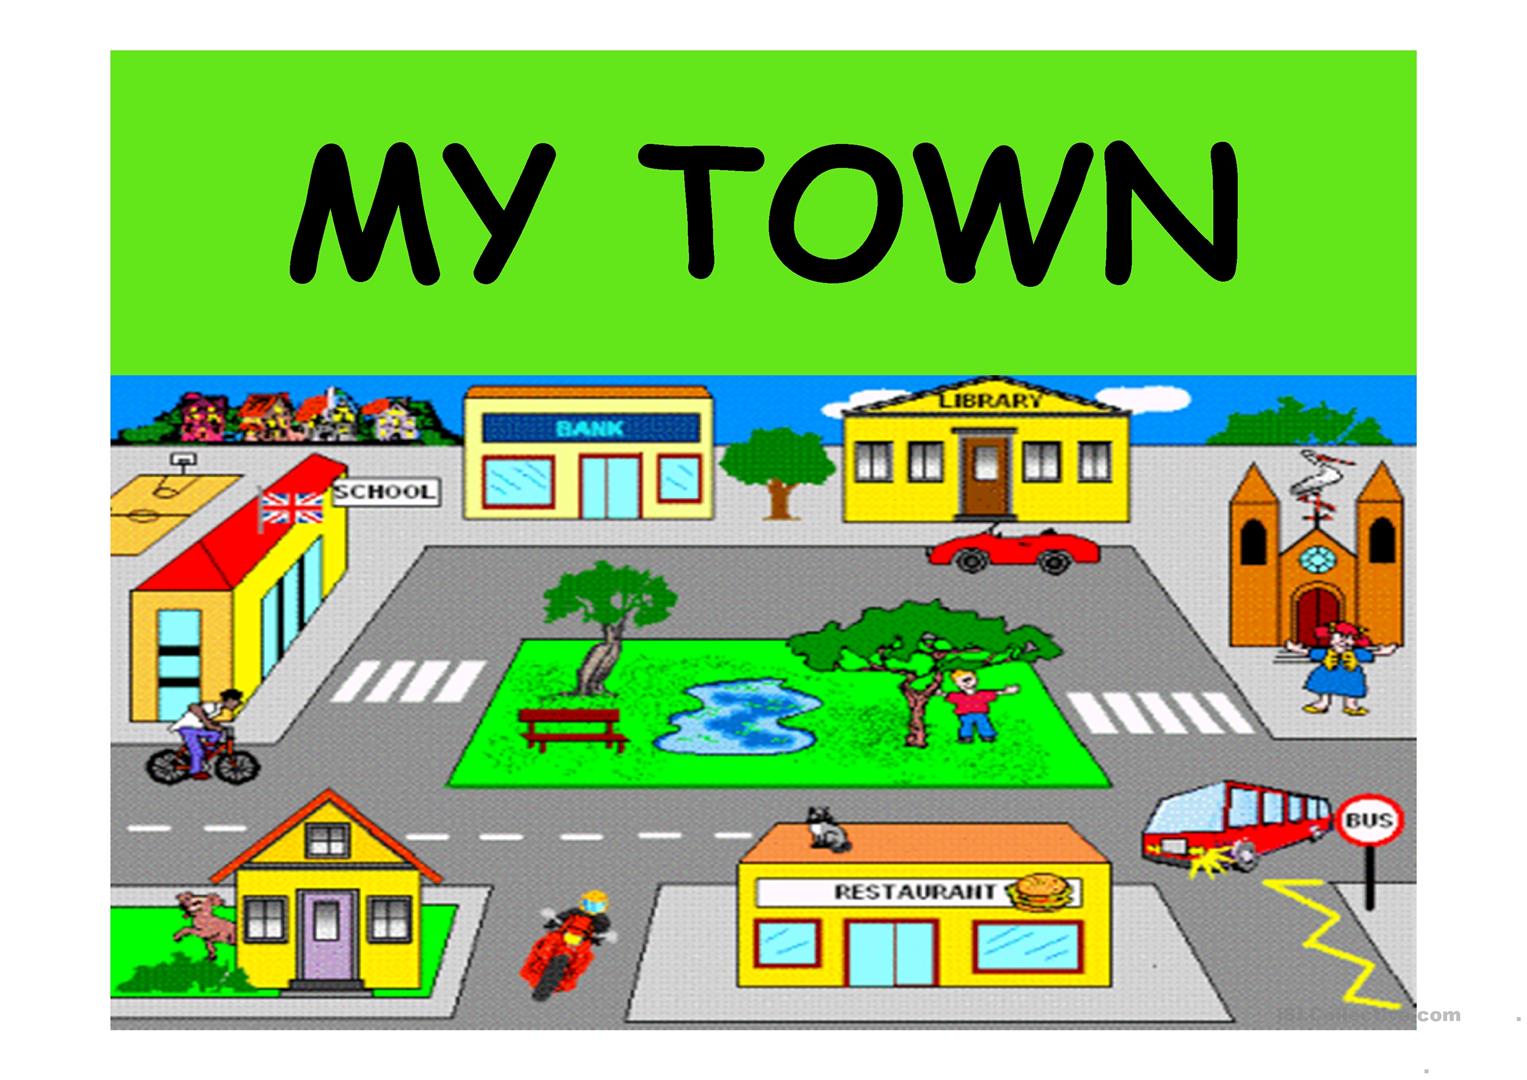 This part of town. Плакат my Town. Places in Town для детей. Иллюстрации улиц города для детей. Картинка города для описания.